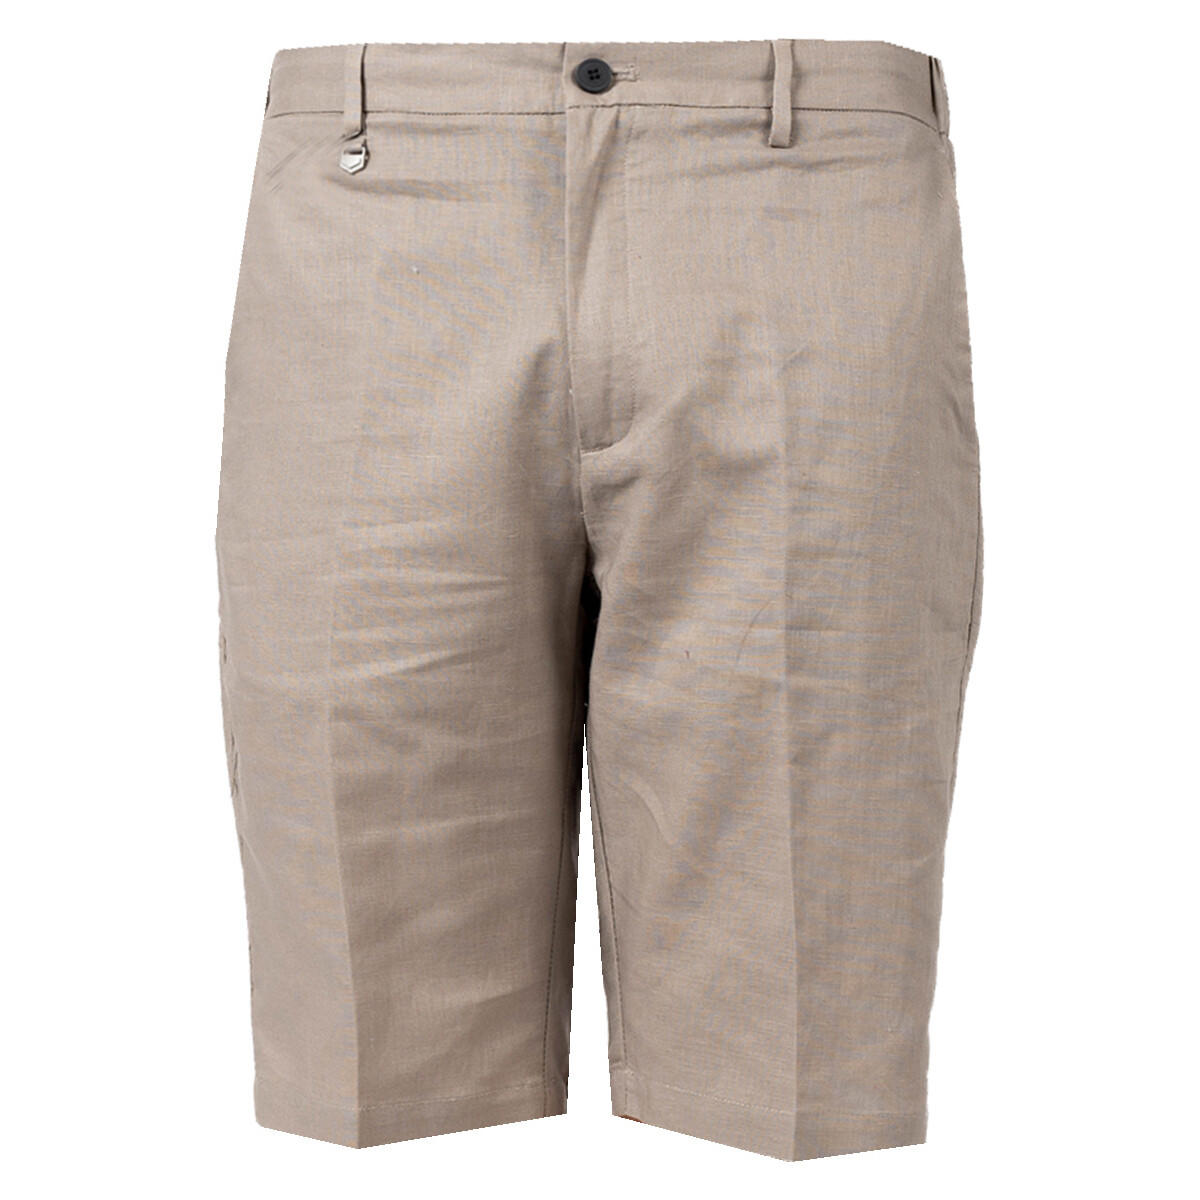 textil Herr Shorts / Bermudas Antony Morato MMSH00145-FA400060 Beige